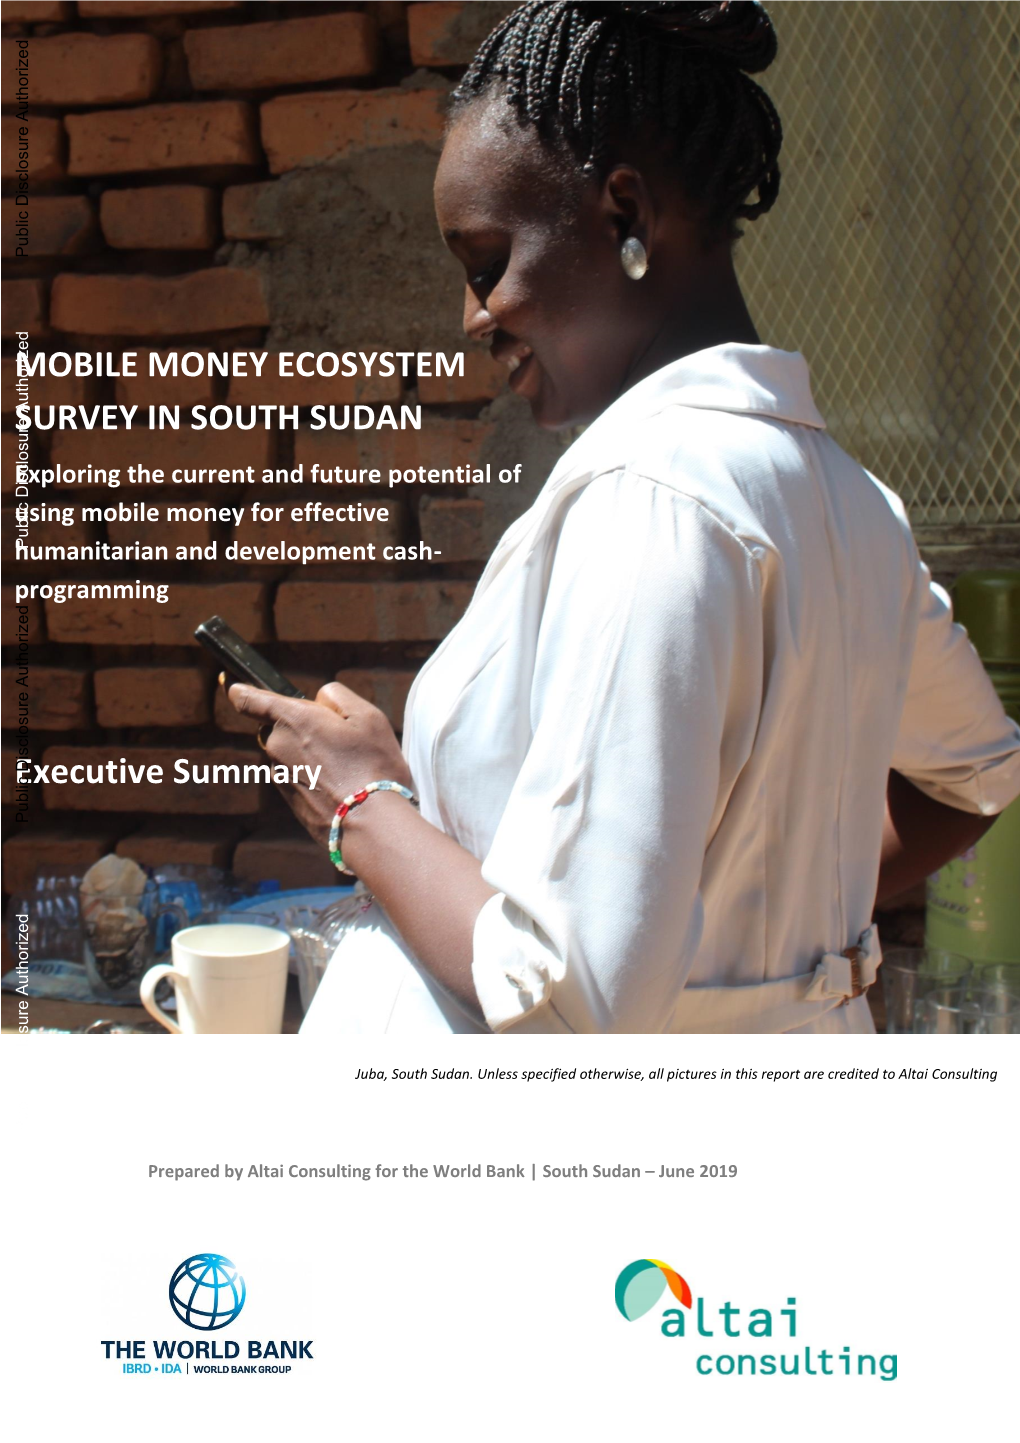 Mobile Money Ecosystem Survey in South Sudan